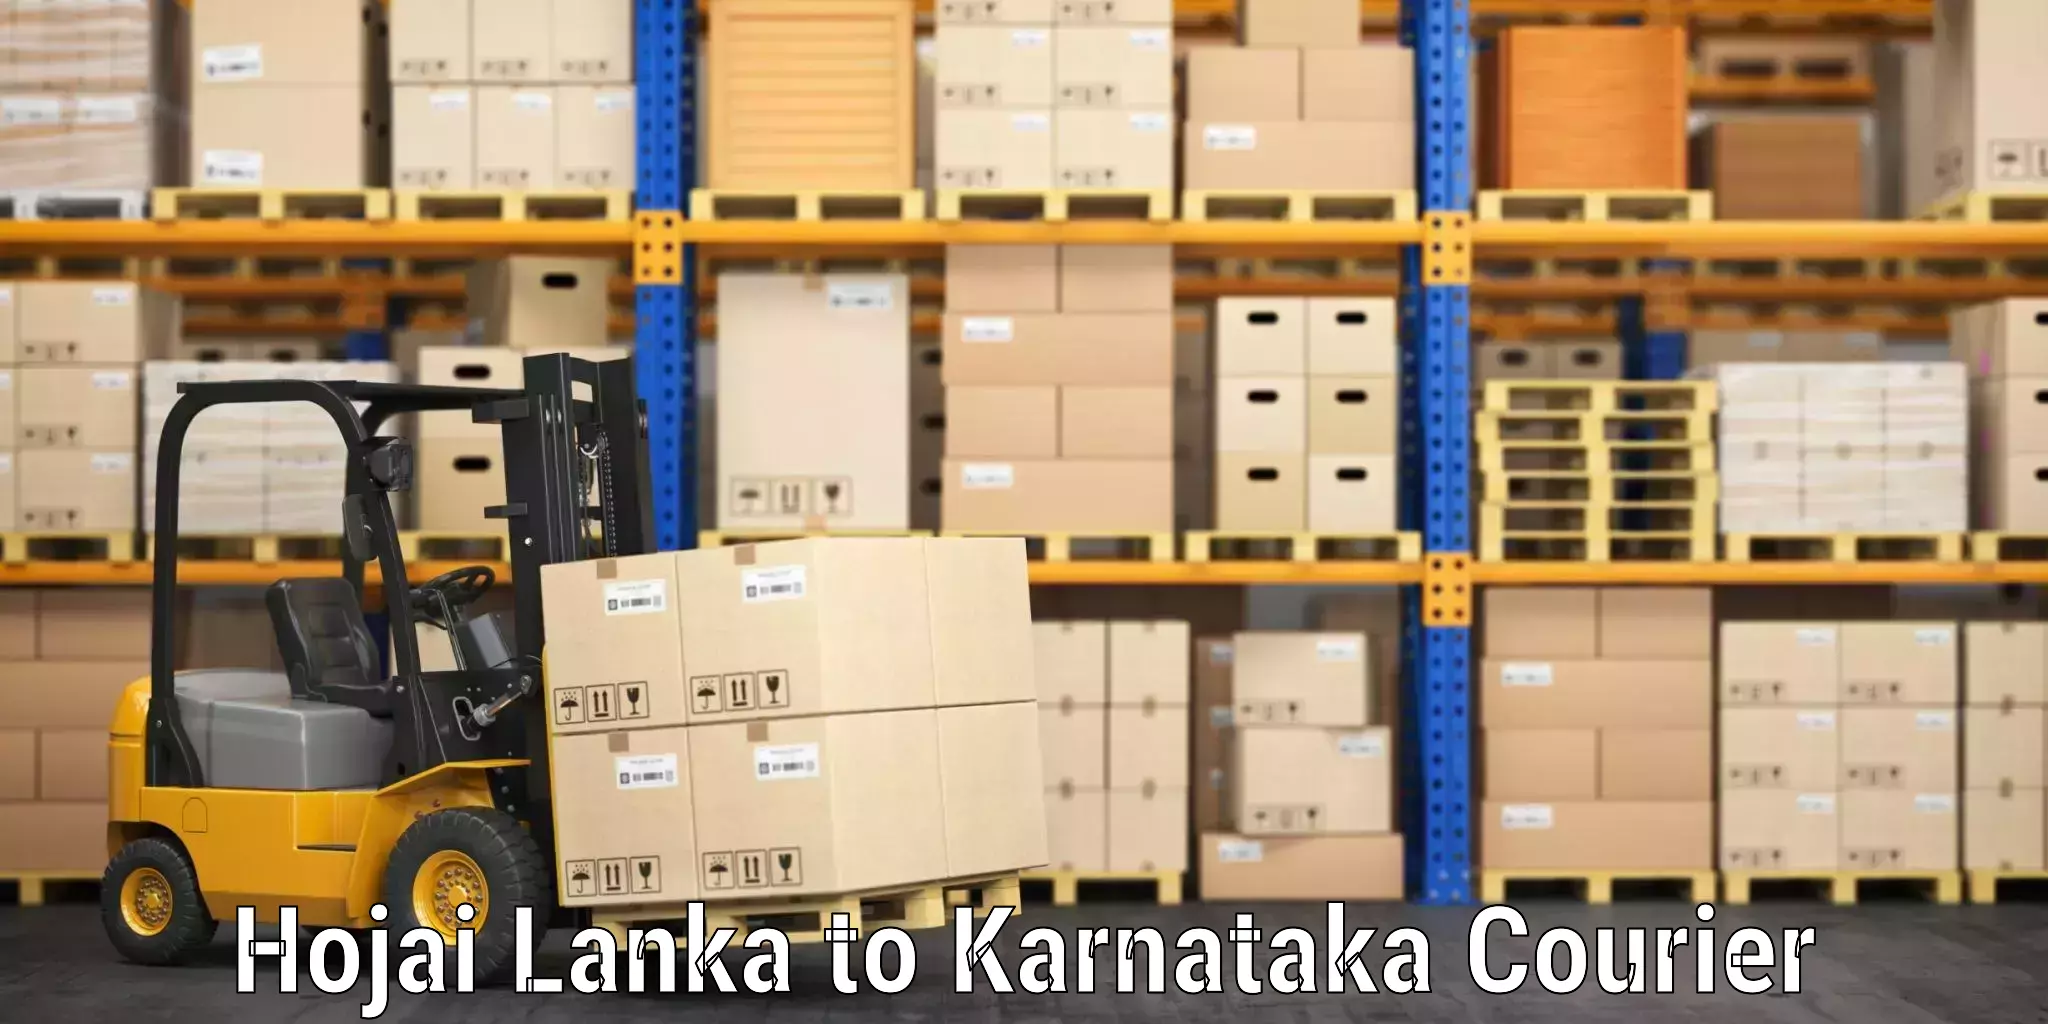 Domestic luggage transport Hojai Lanka to Karnataka